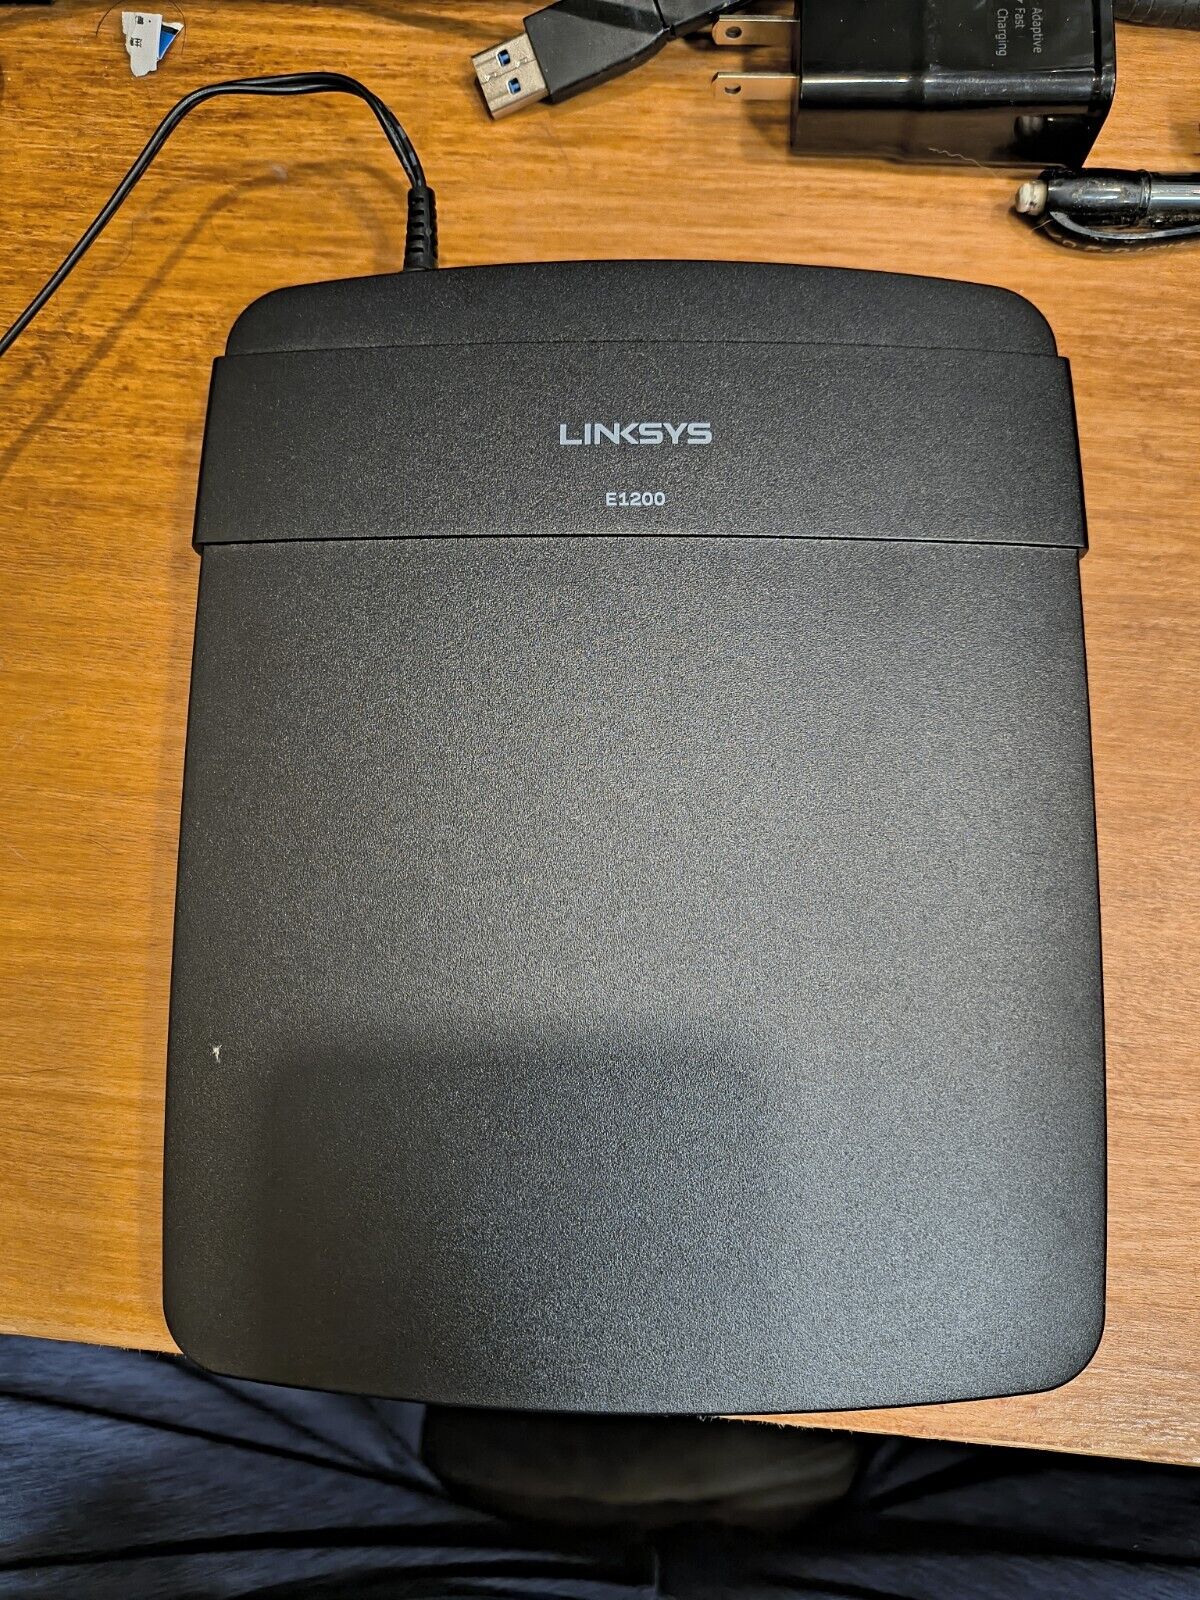 LINKSYS N300 Wi-Fi Wireless Router E1200